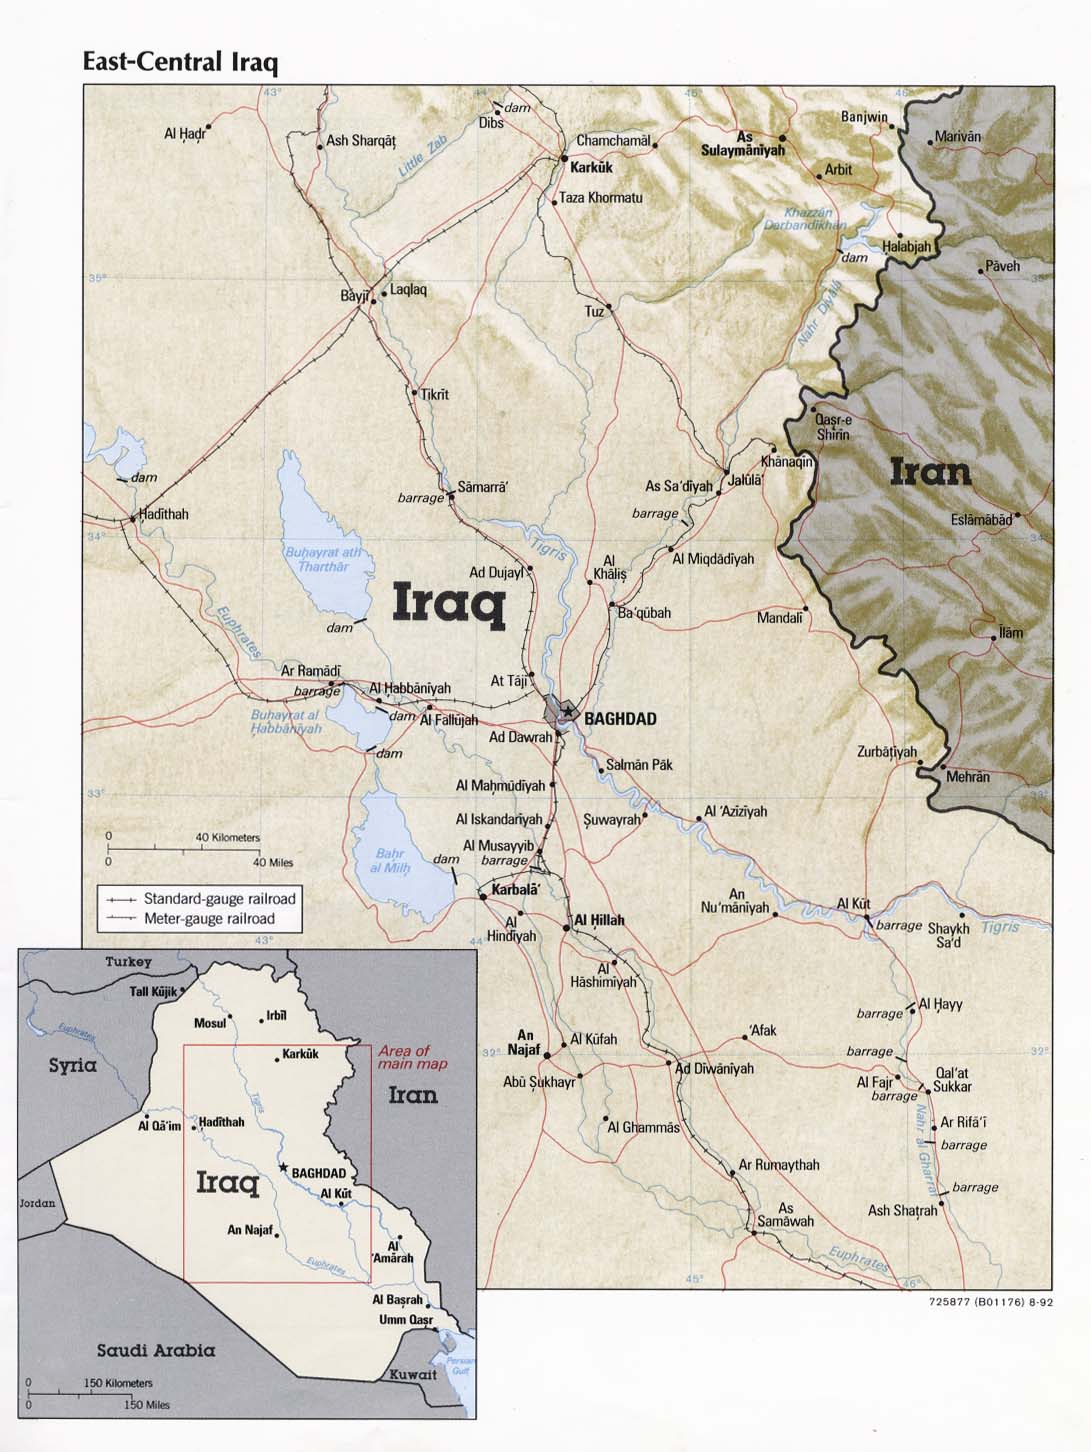 East-Central Iraq From Iraq a Map Folio CIA 1992